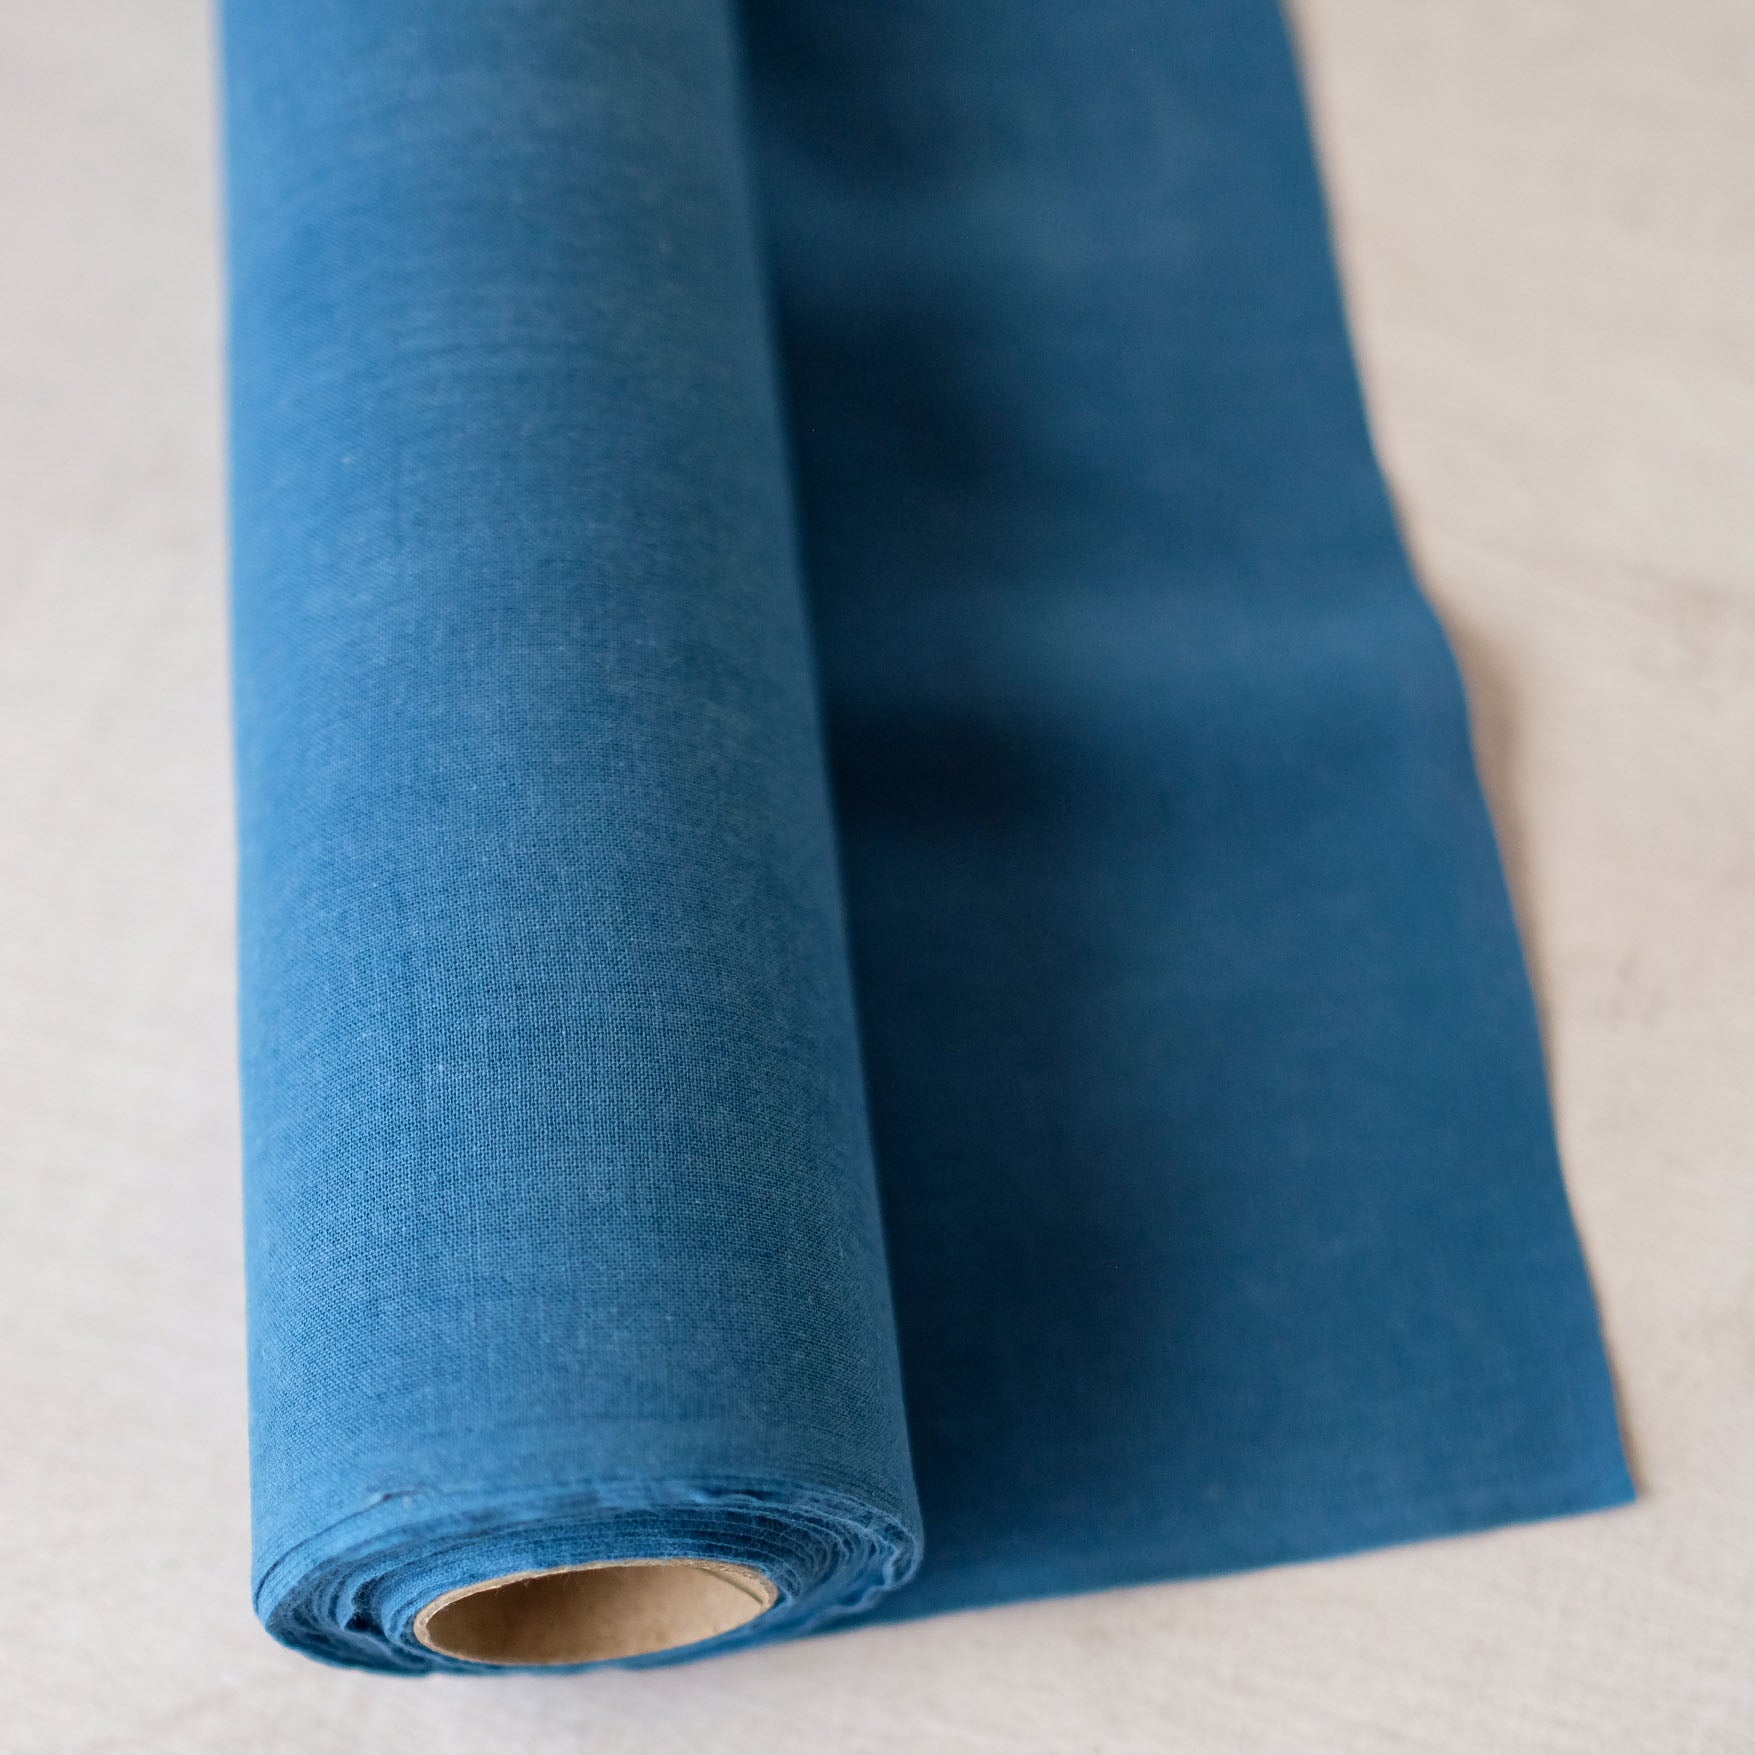 Indigo-dyed fabric - 100% cotton - 13 3/4" wide